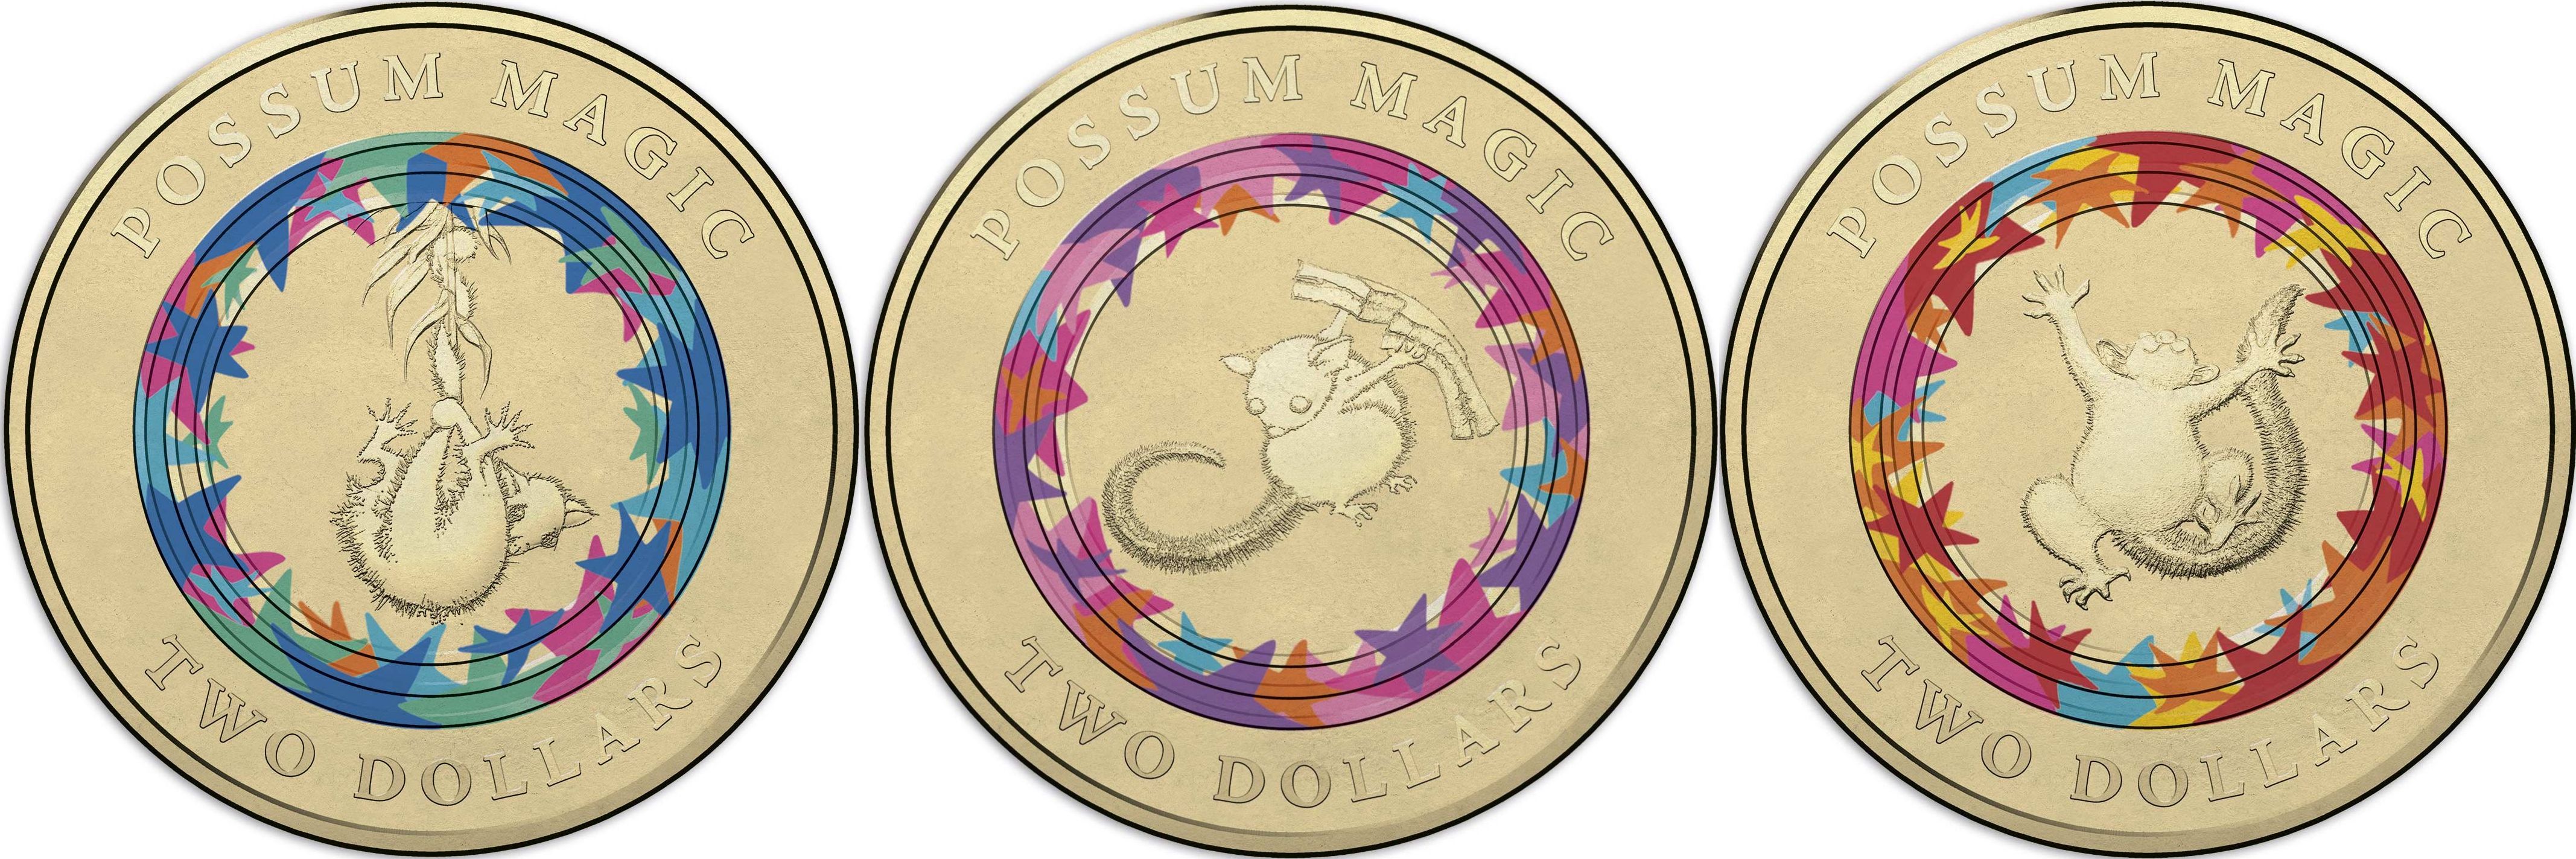 POSSUM MAGIC PINK RING RARE HUSH Details about   2017 AUSTRALIAN $2 TWO DOLLAR COIN 